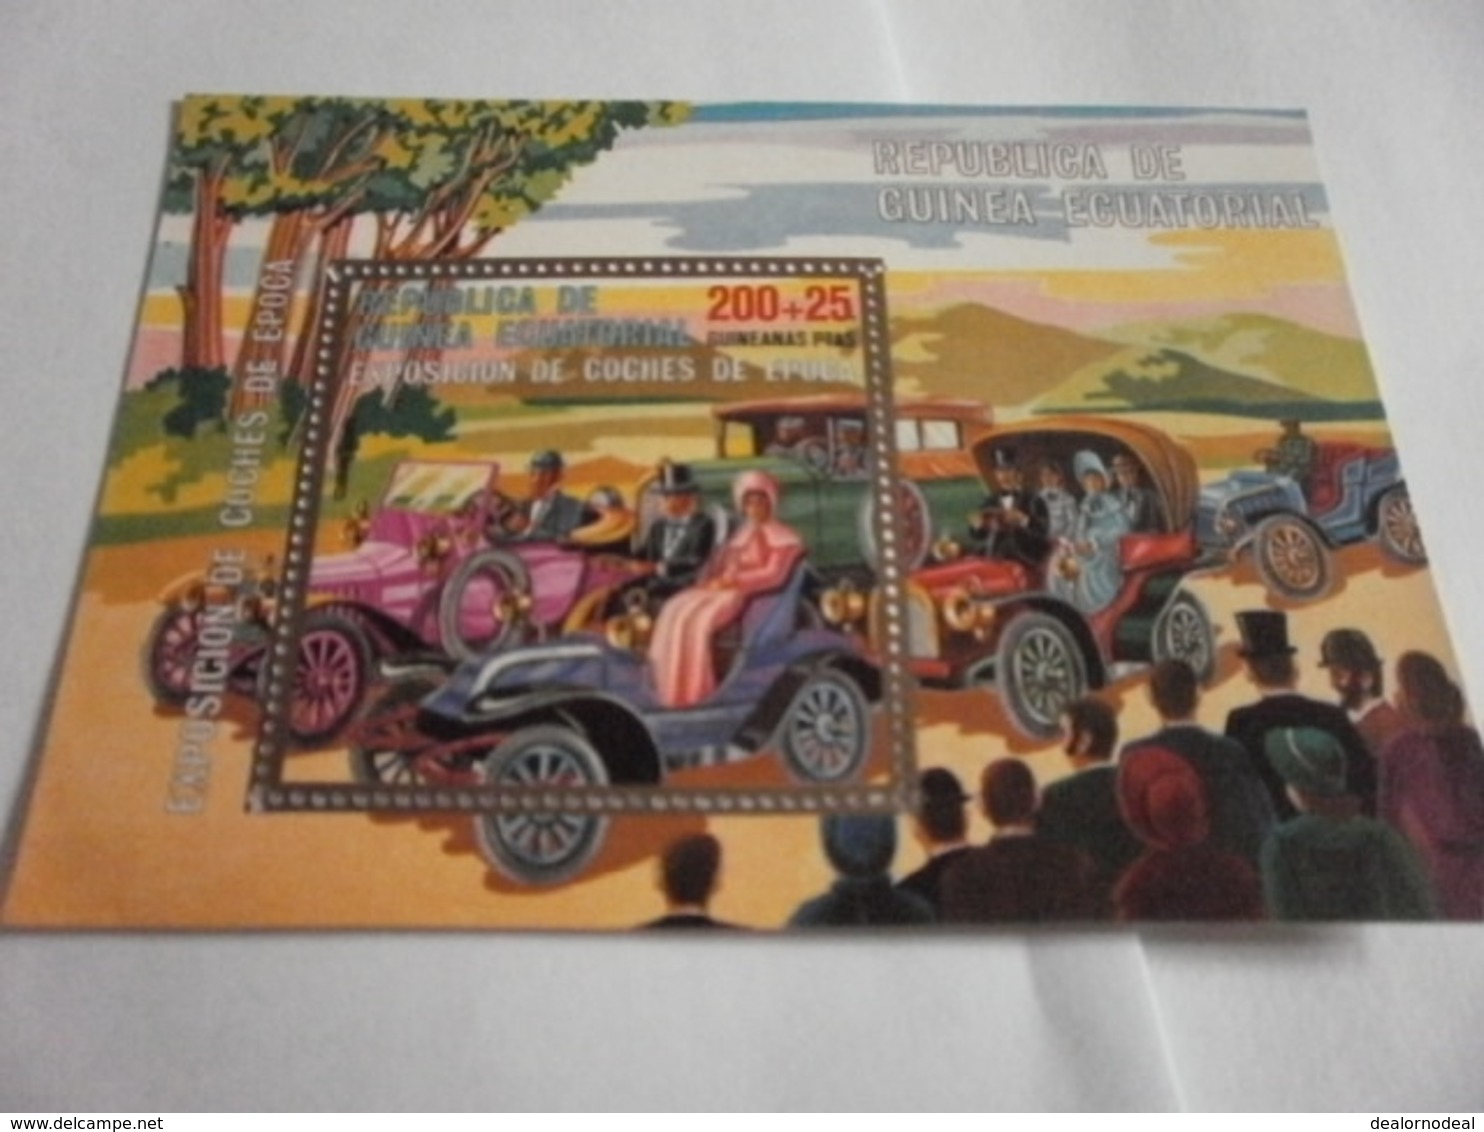 Miniature Sheet Perf Cars Expo - Equatorial Guinea